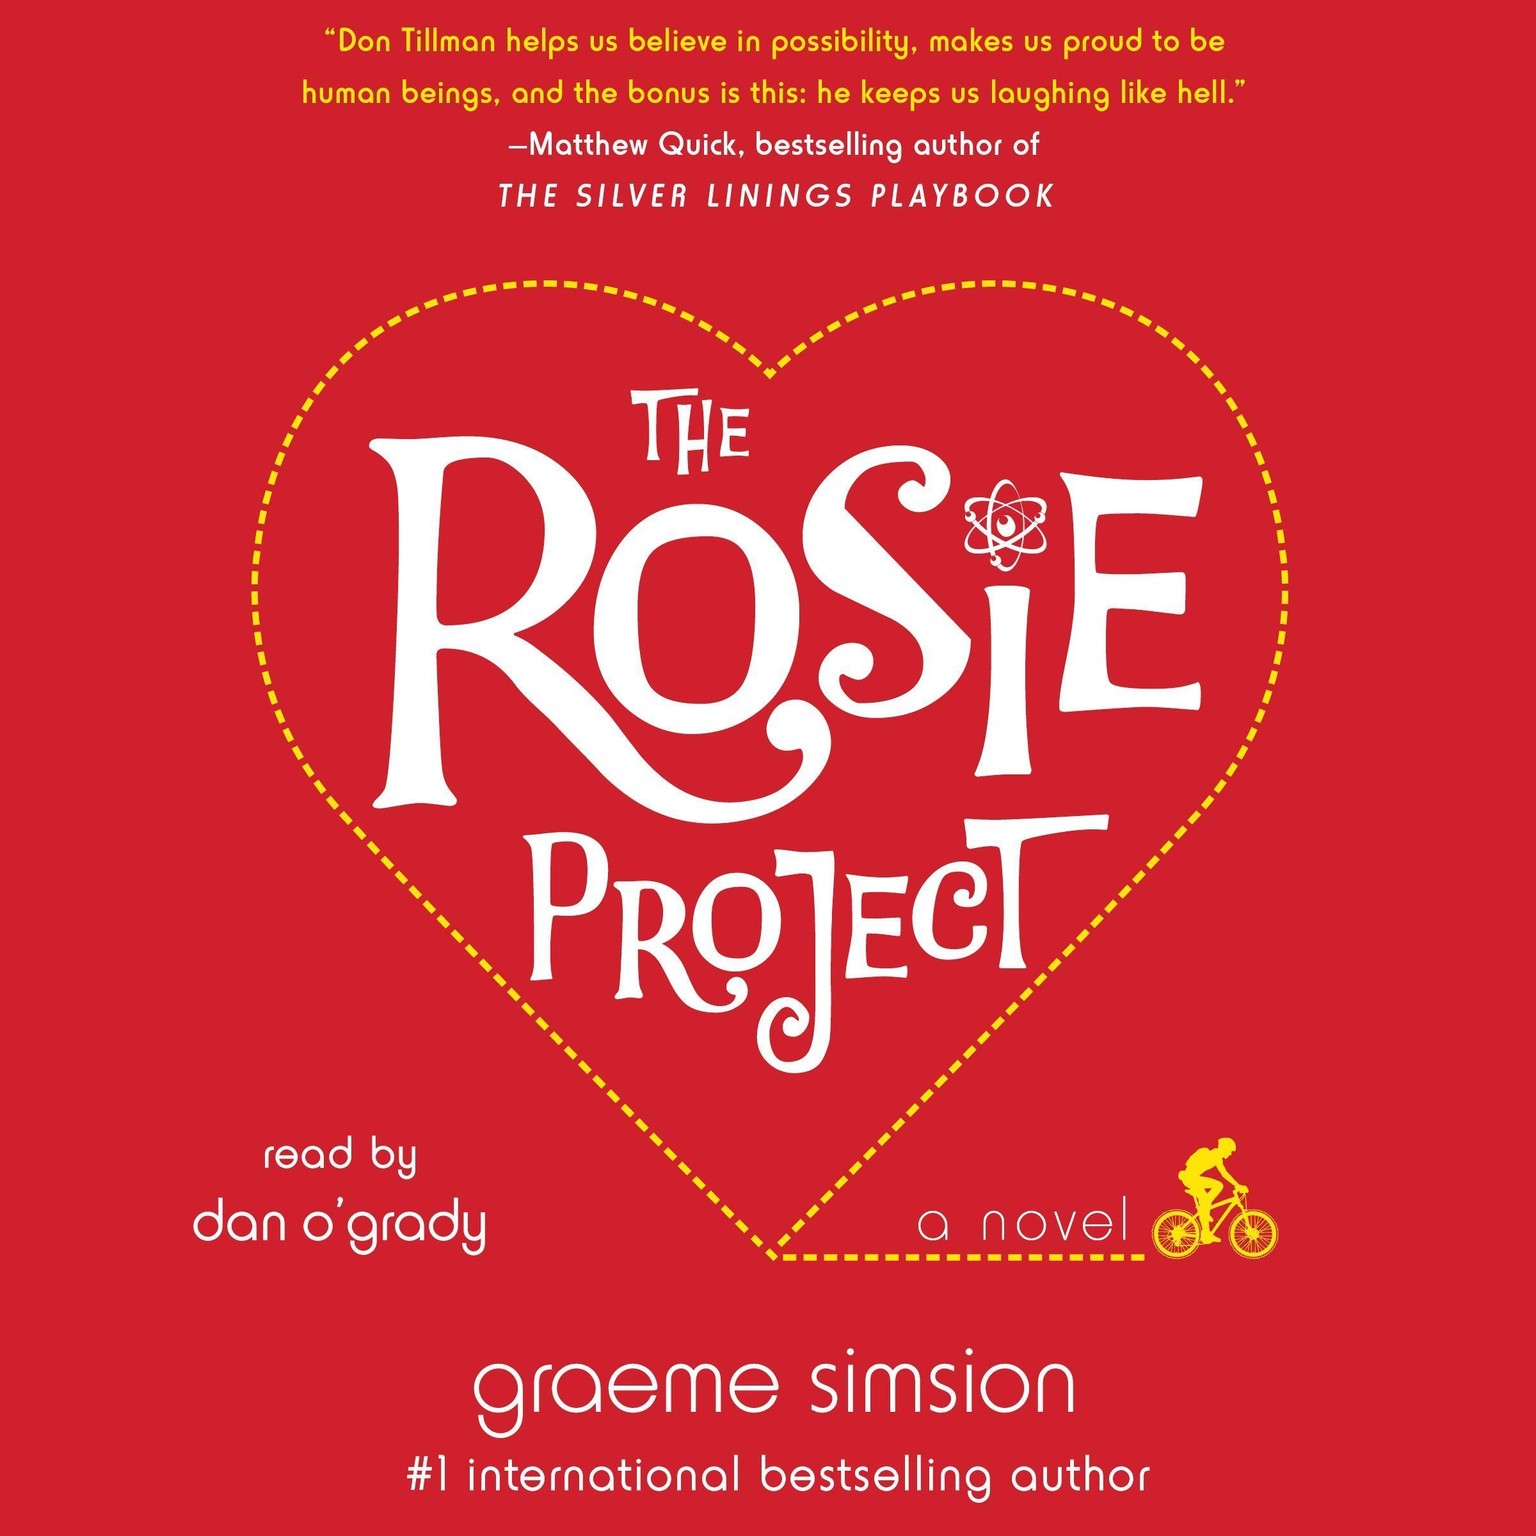 Graeme Simsion, Dan O'Grady: The Rosie Project (AudiobookFormat, 2014, Simon & Schuster)